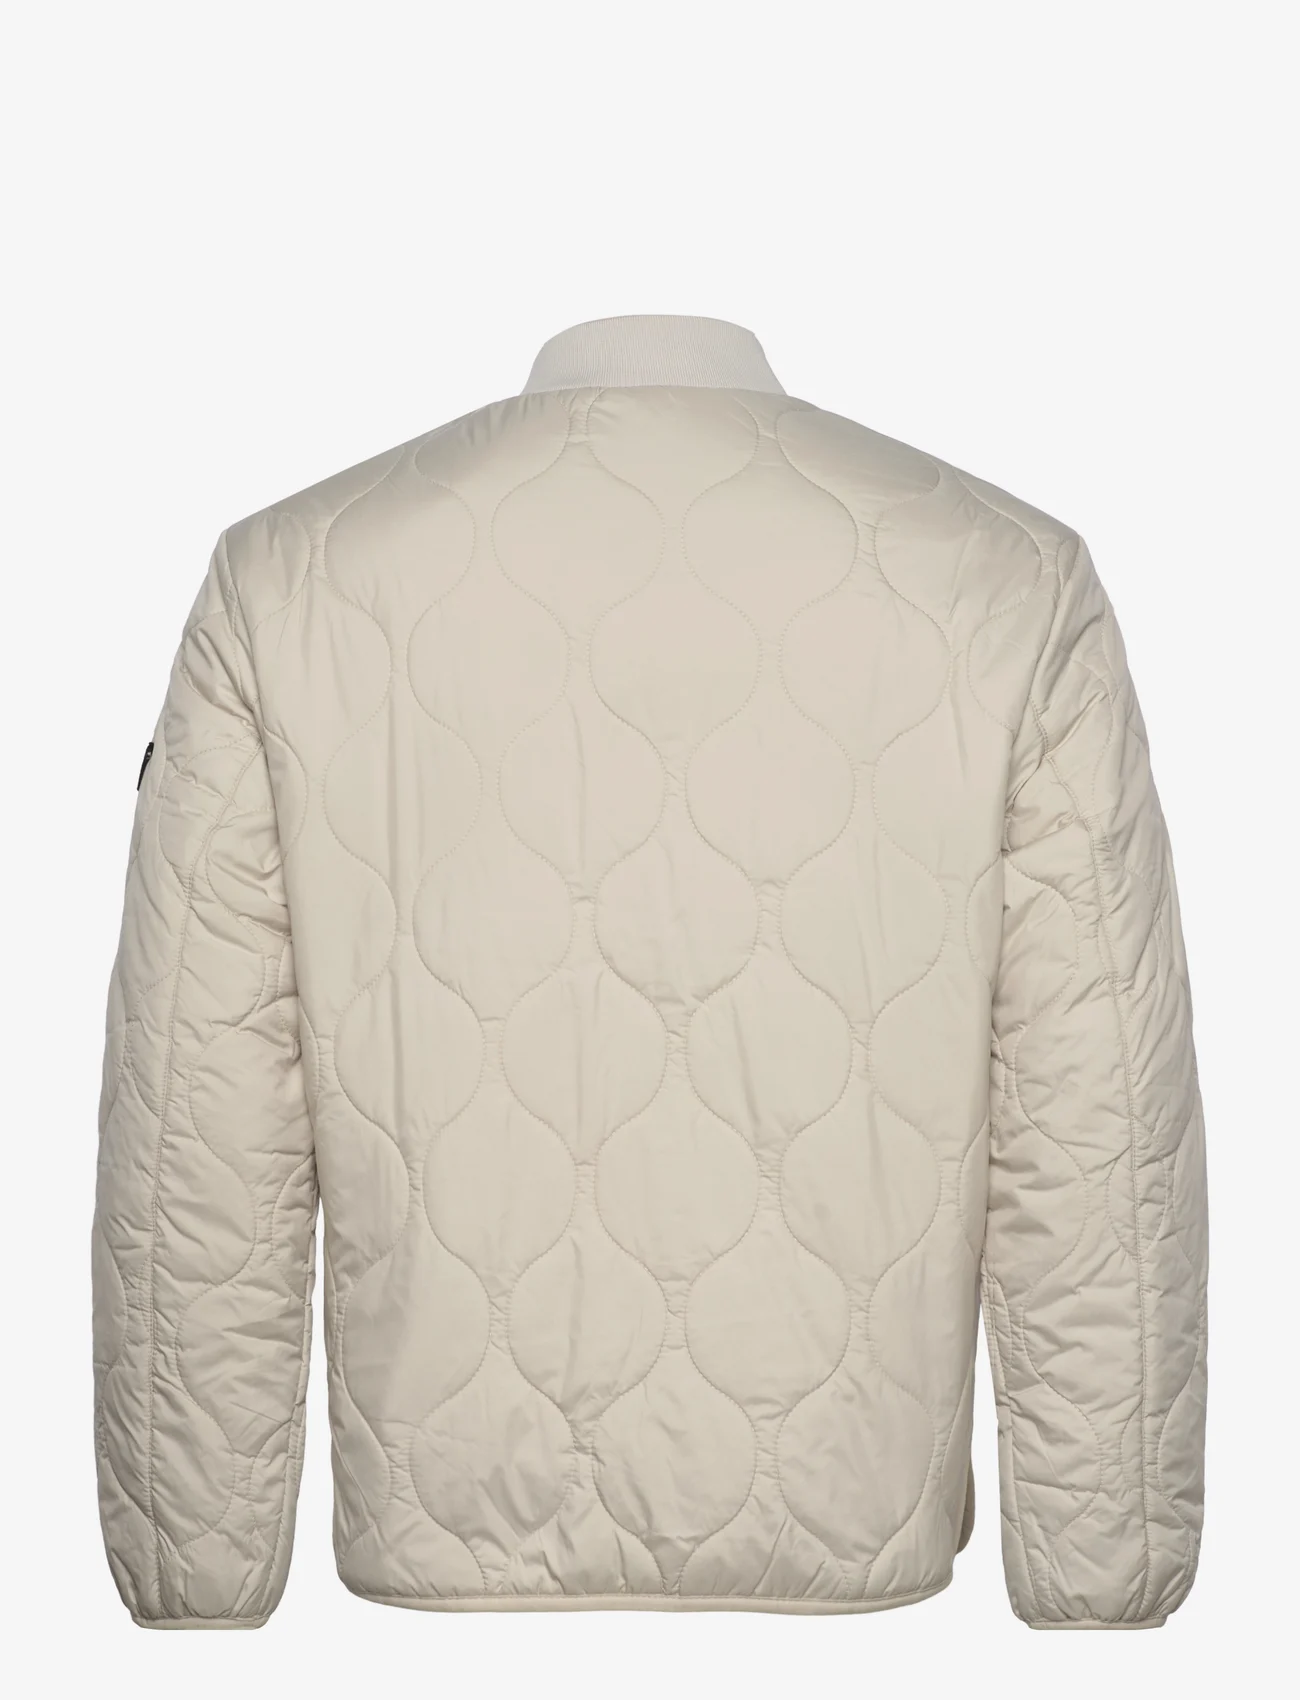 Tom Tailor - relaxed liner jacket - vinterjackor - beige alfalfa - 1